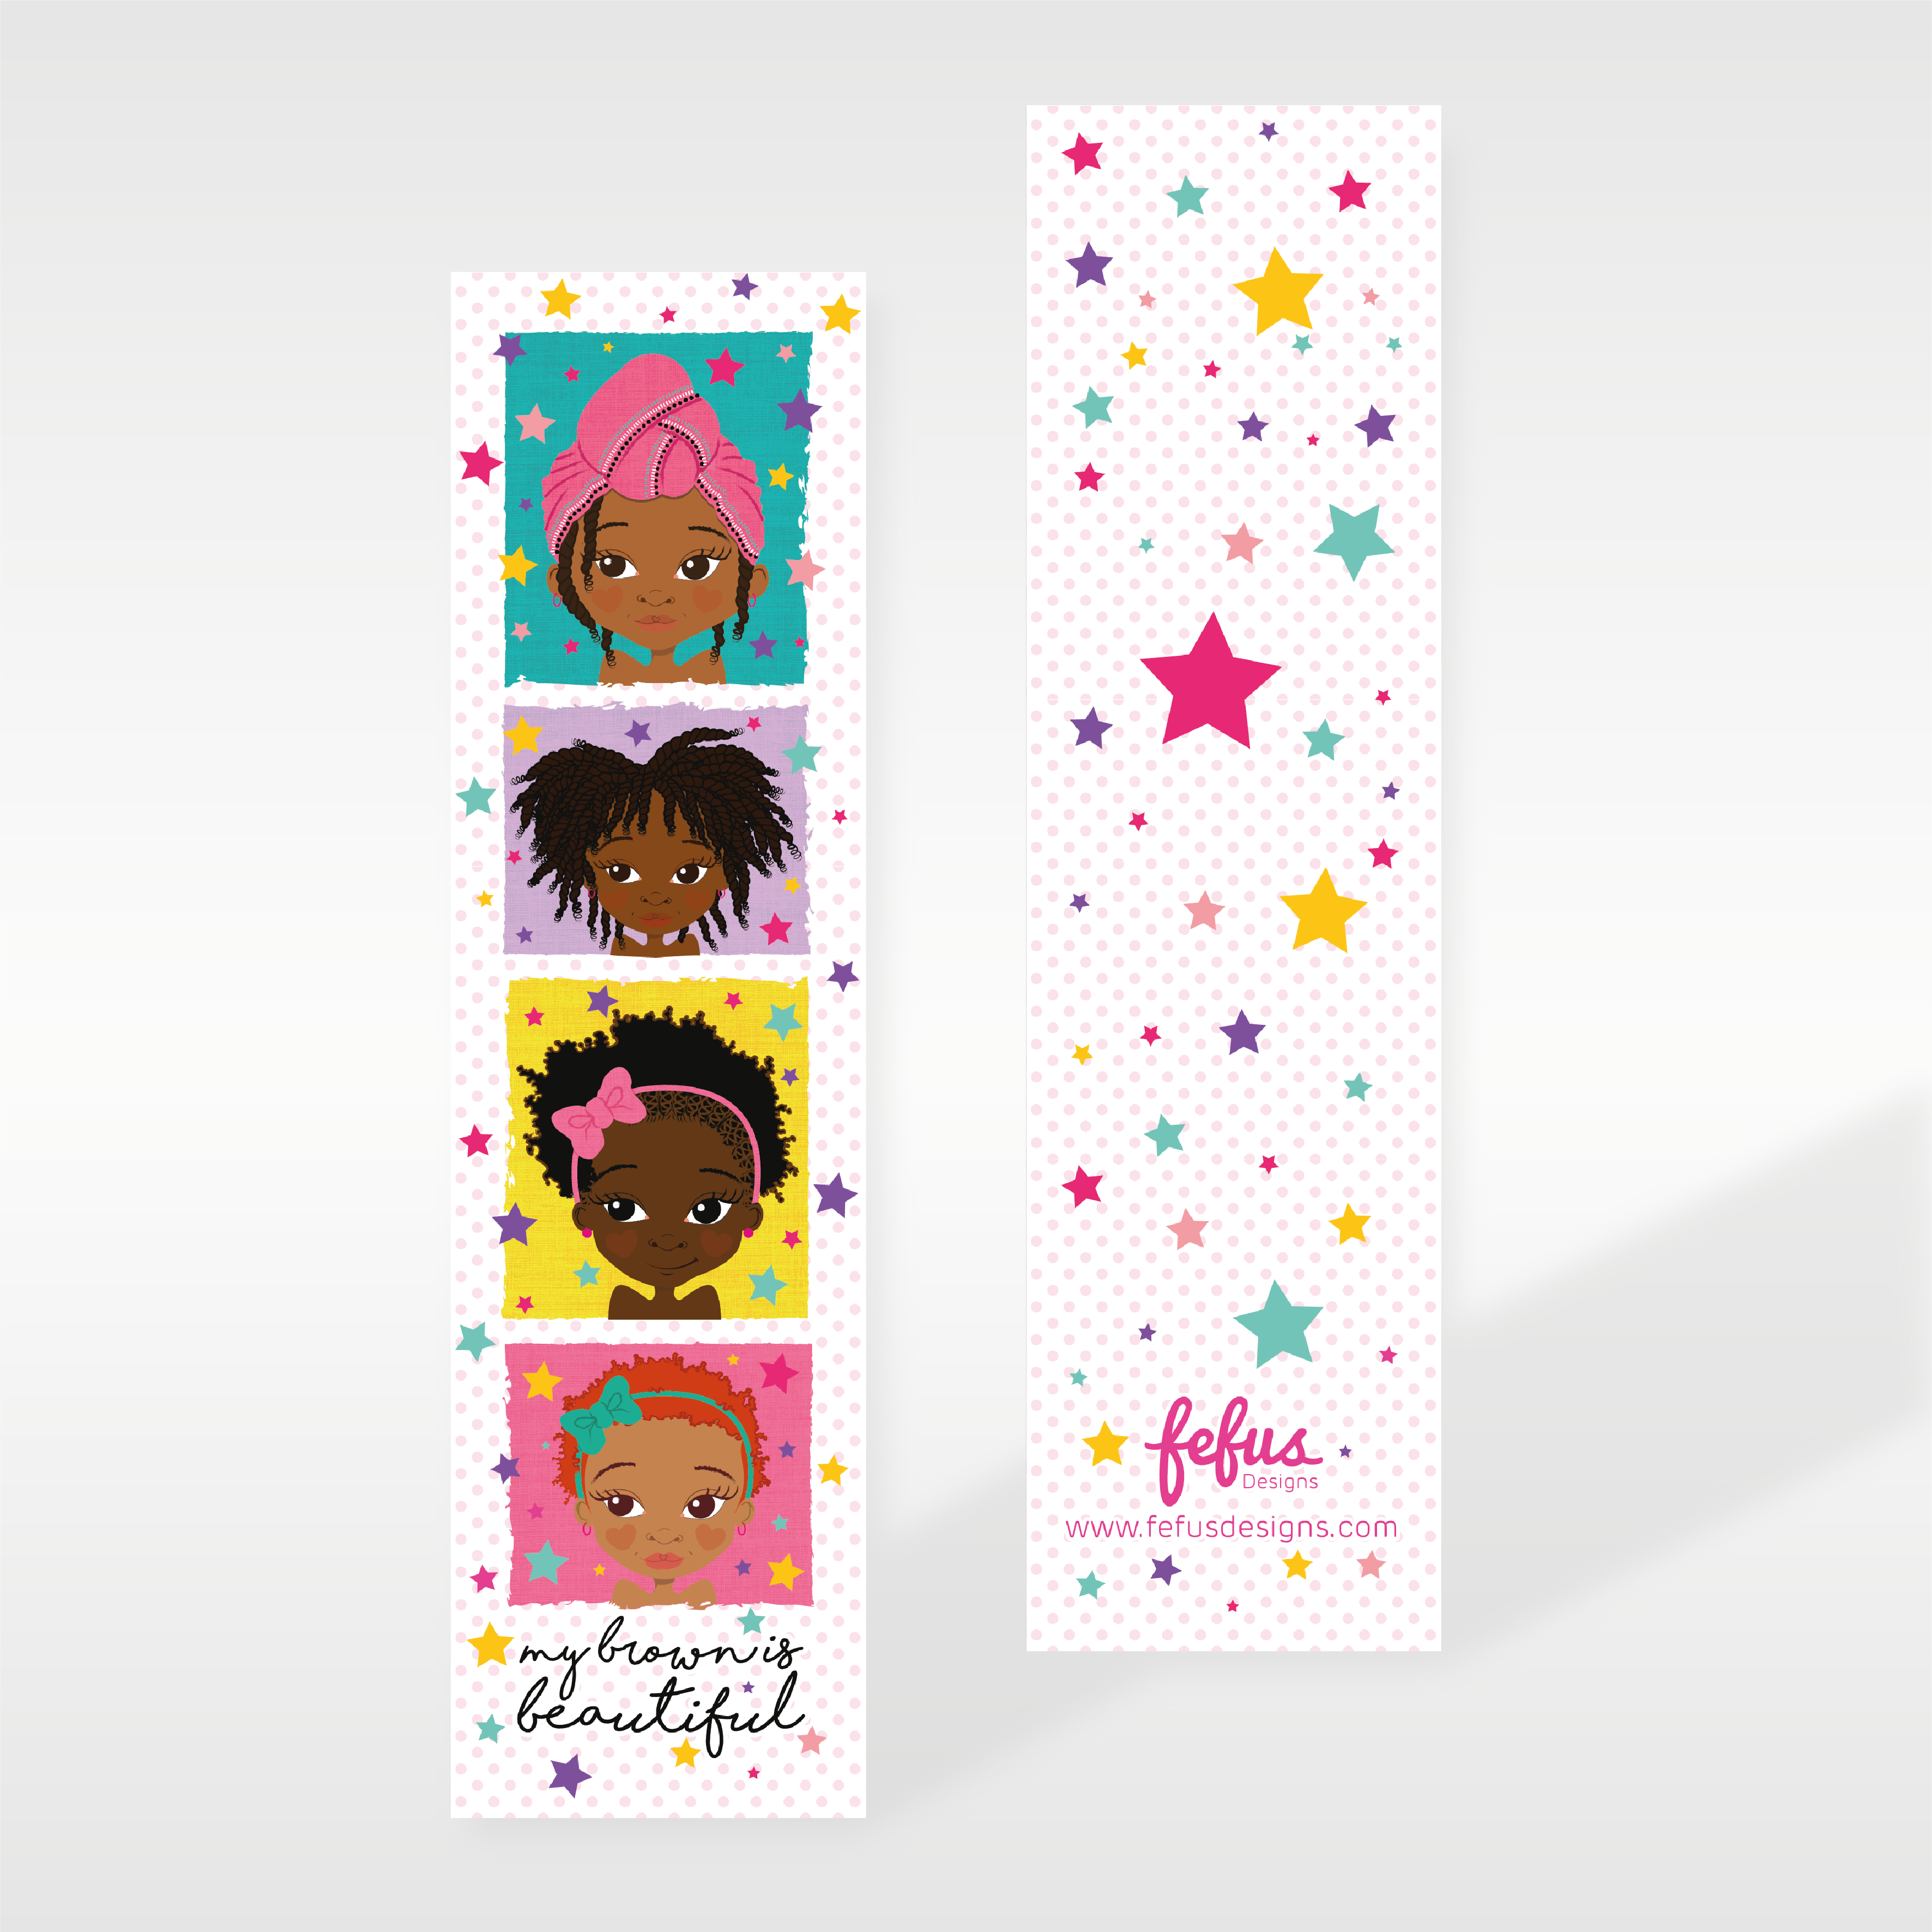 4 Brown Girls - Black Girls Bookmarks | Fefus designs